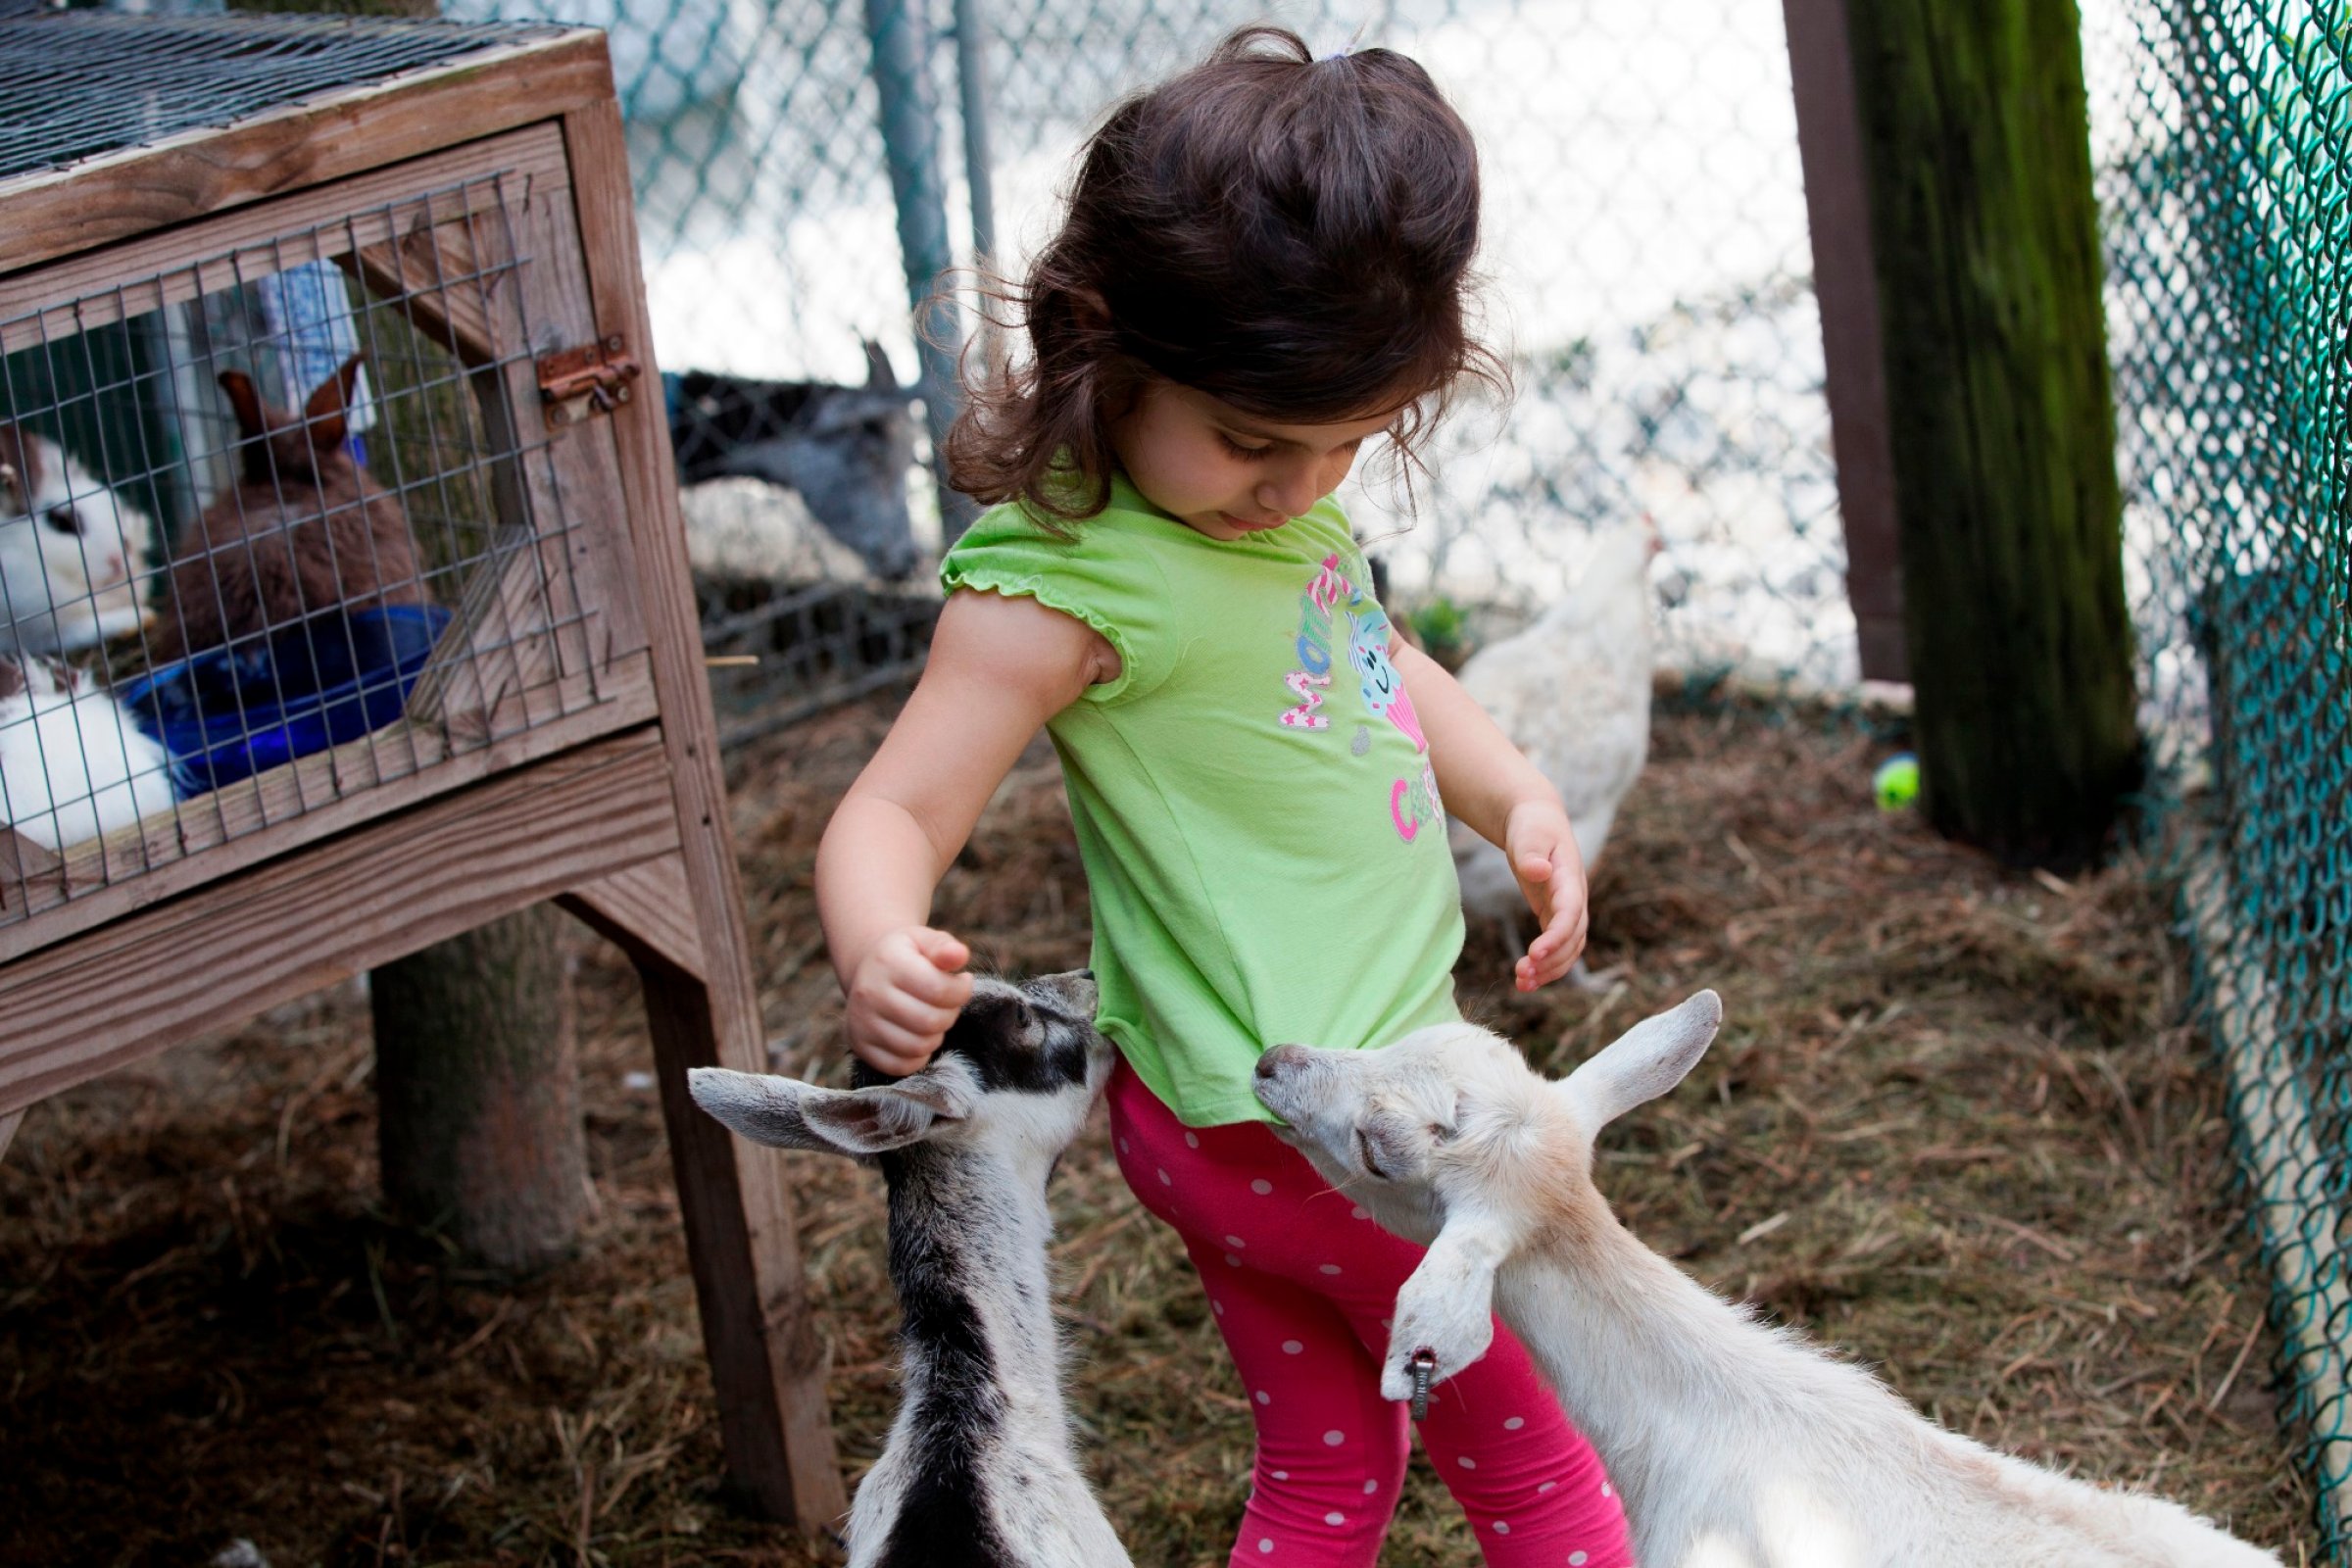 Kontakt med dyr er positivt for både barn og voksne. Foto: Colourbox